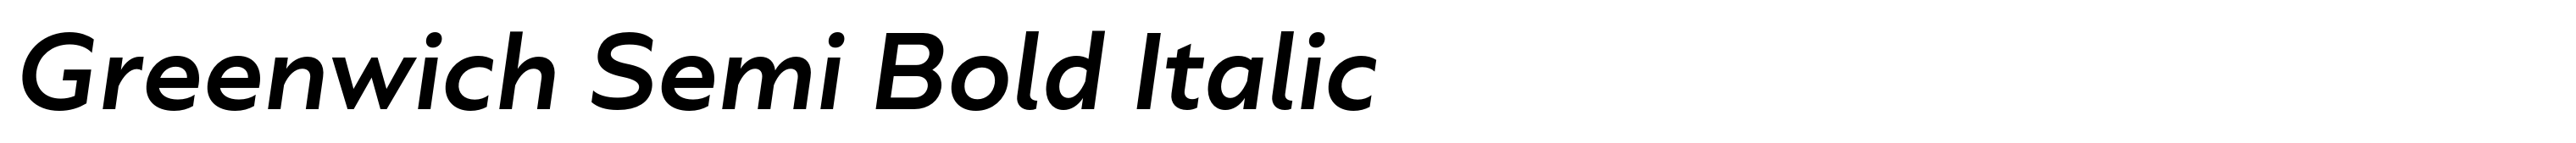 Greenwich Semi Bold Italic